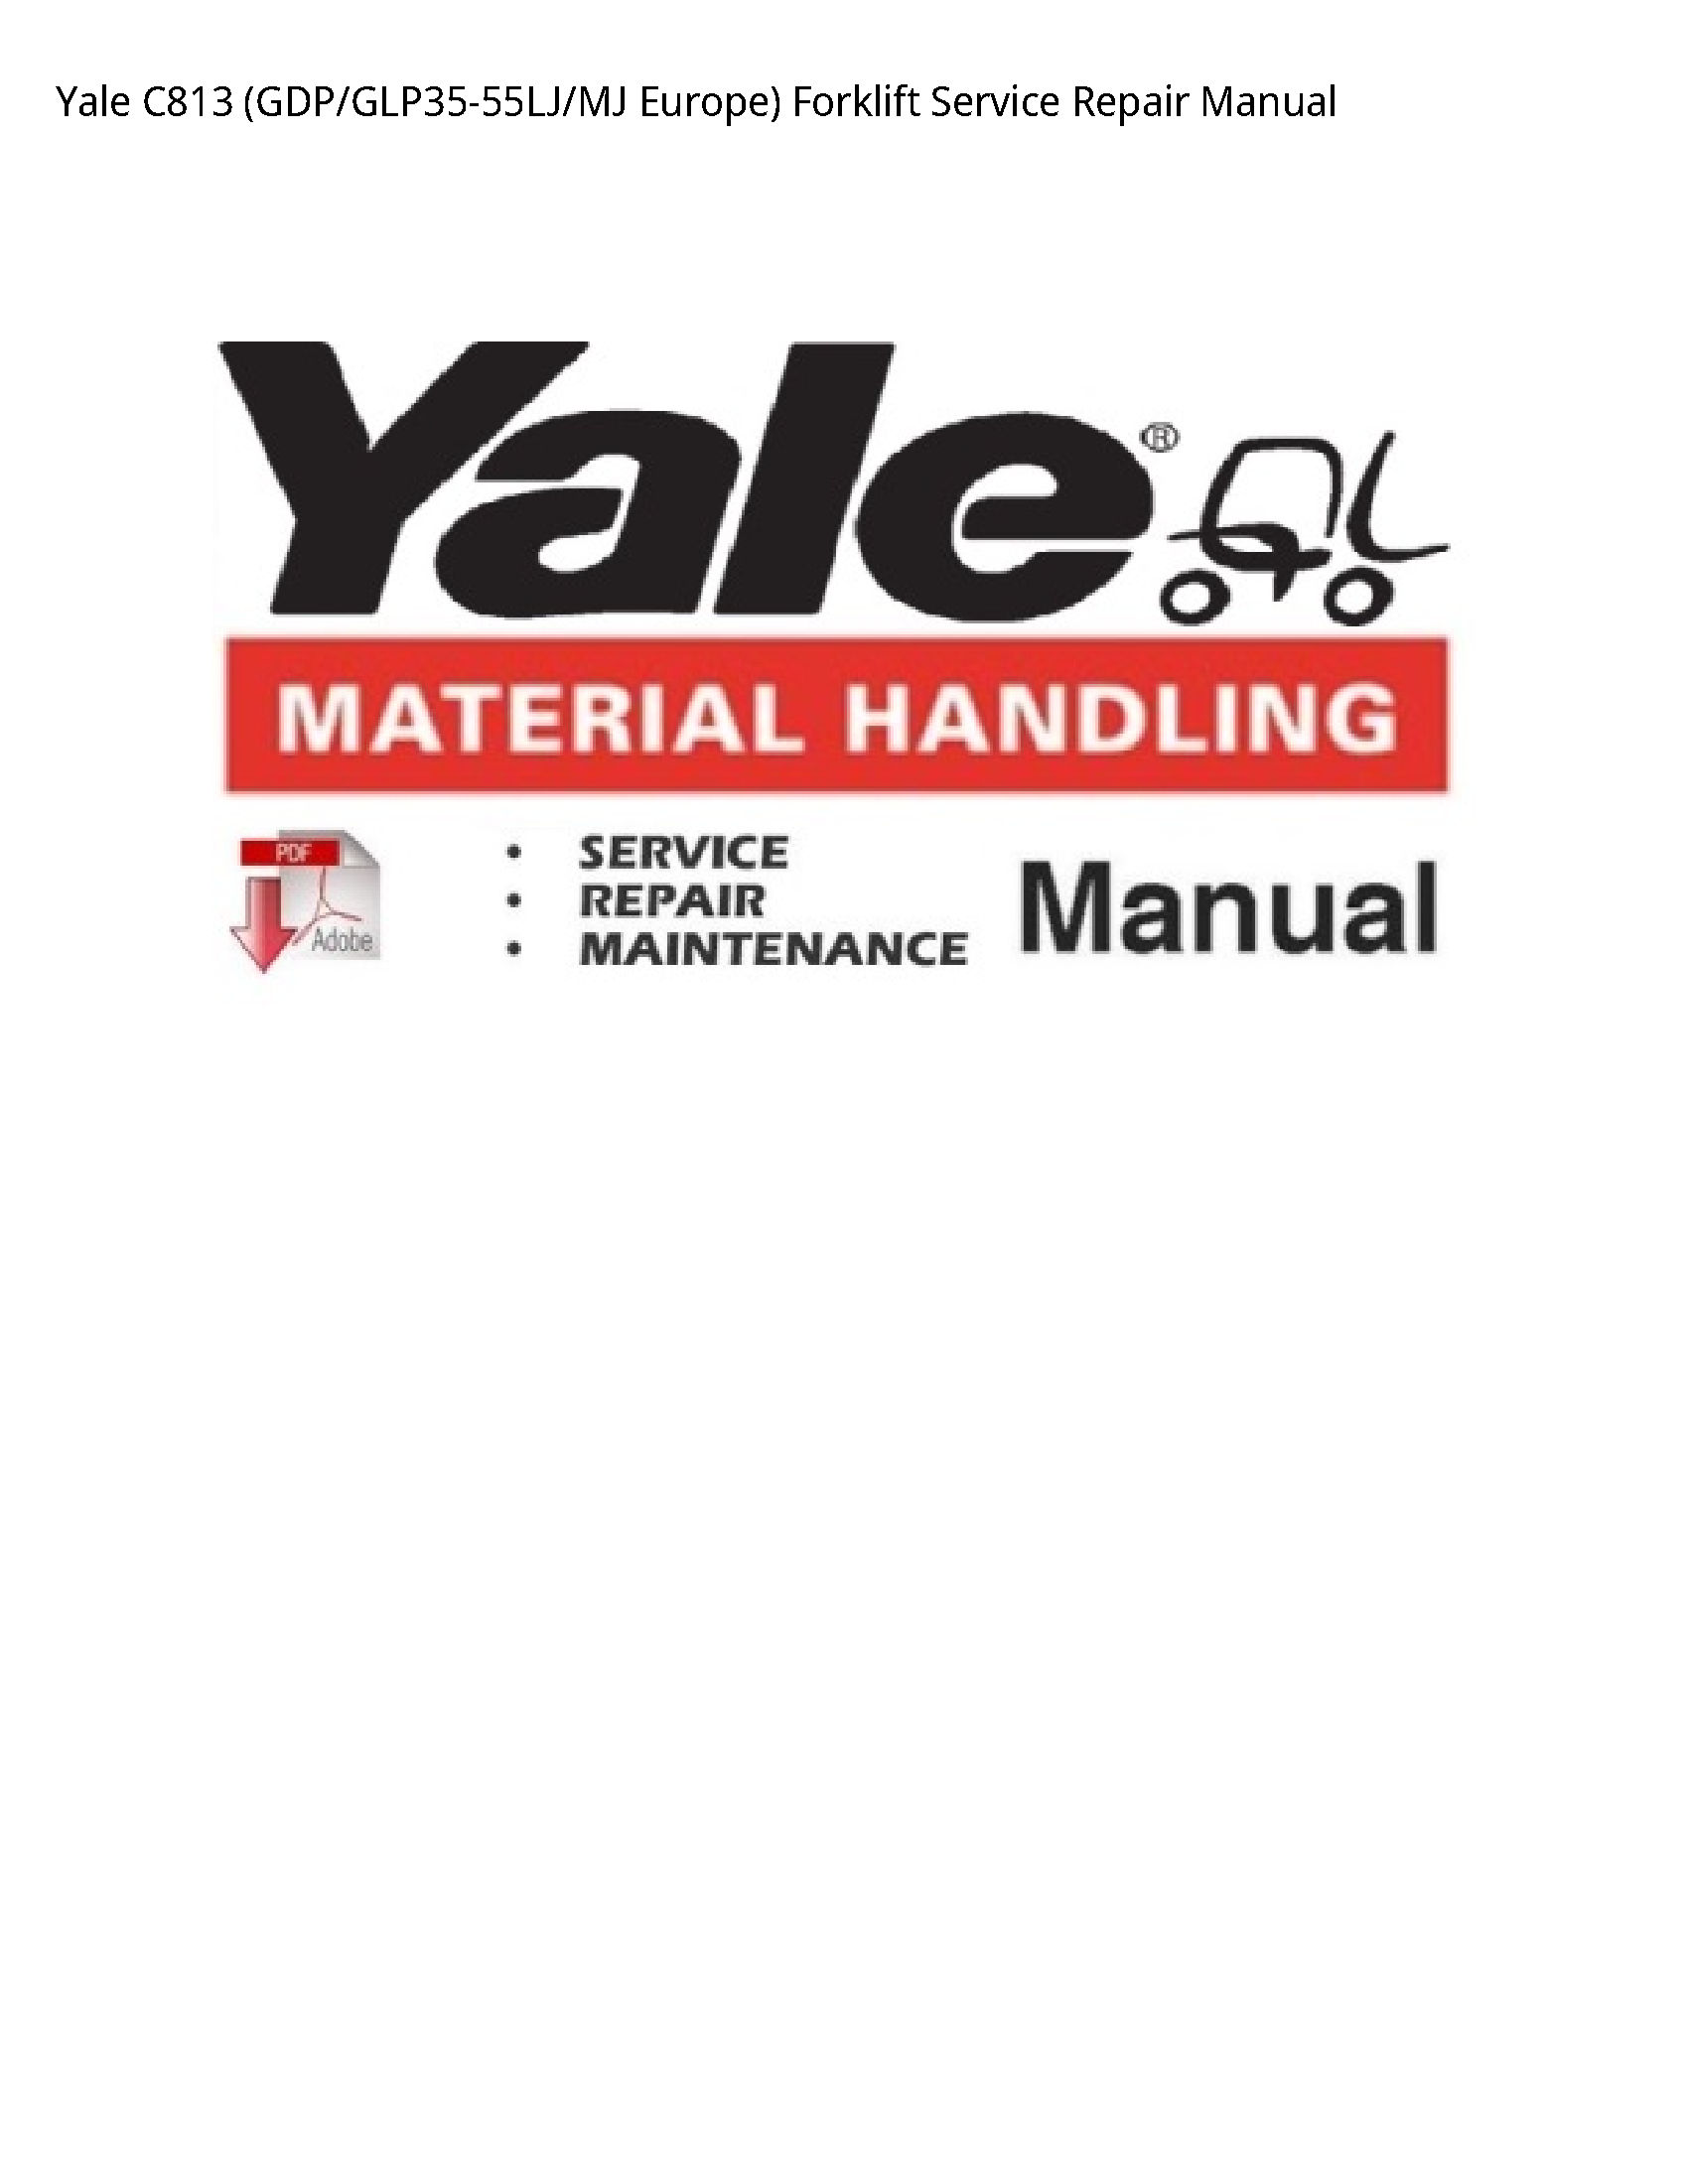 Yale C813 Europe) Forklift manual